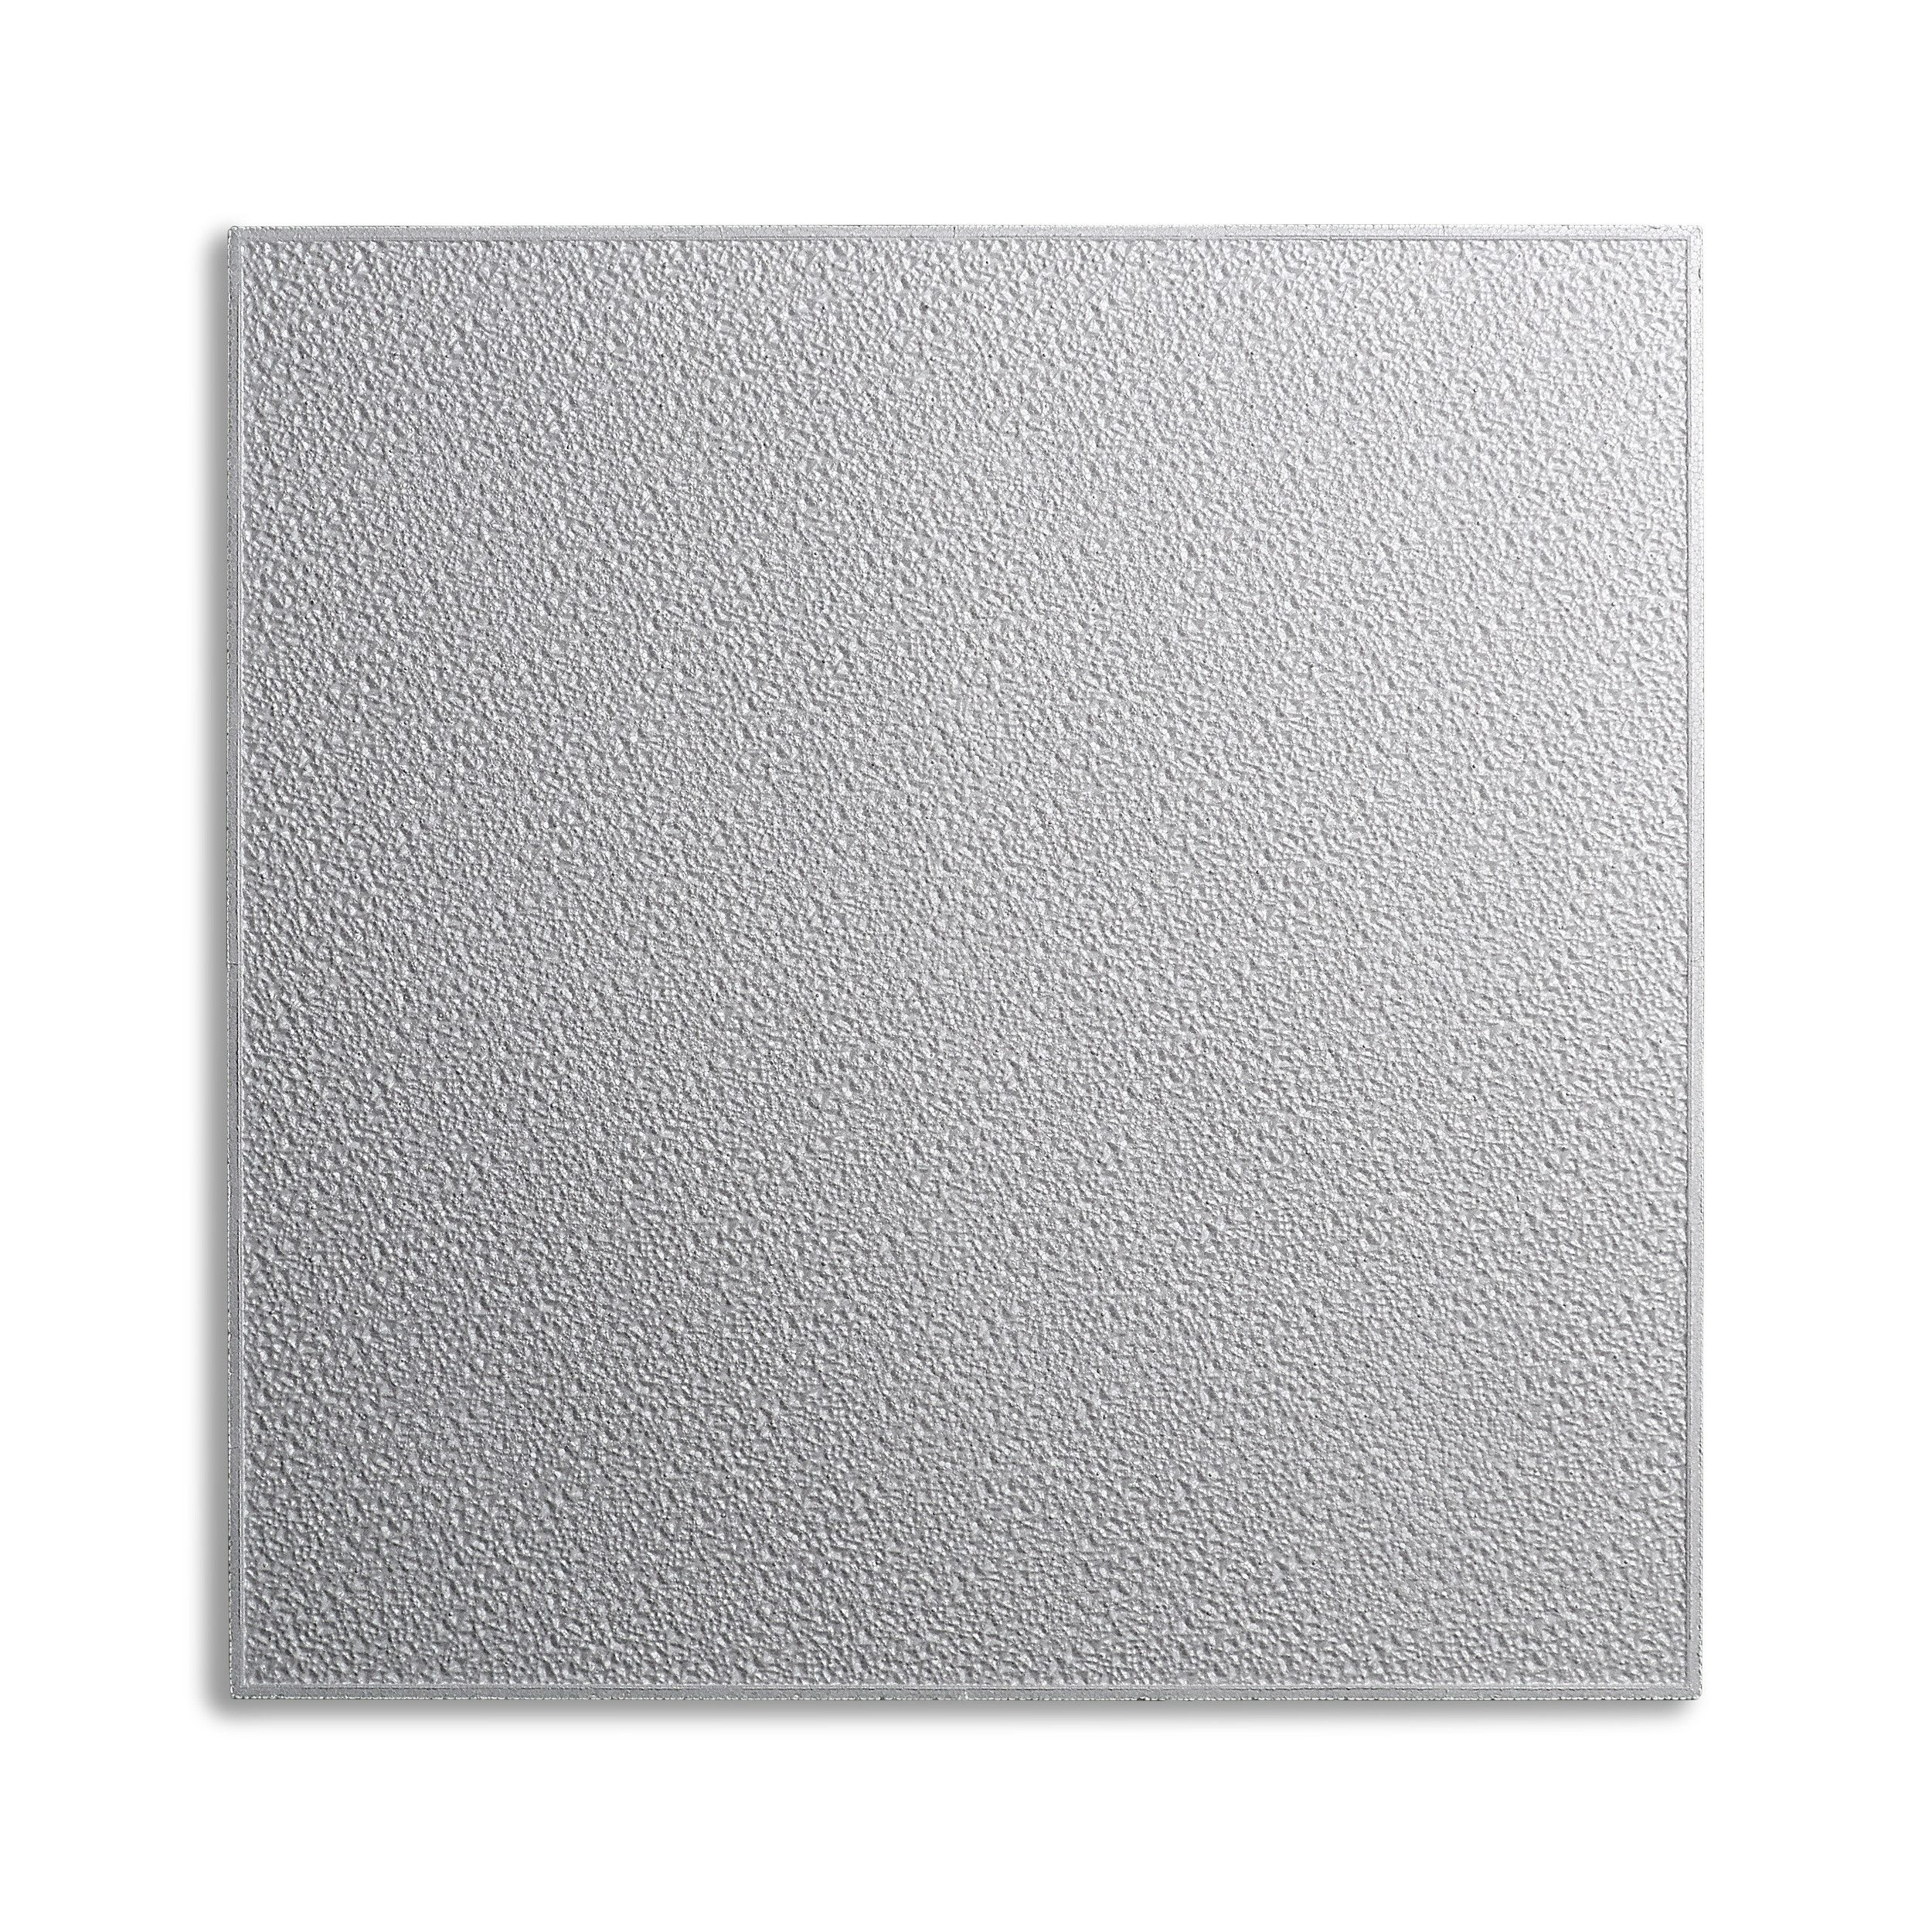 Decosa Deckenpaneel Decosa Deckenplatte Turin, 50 x 50 cm, BxL: 50x50 cm, 2 qm, (2-tlg)